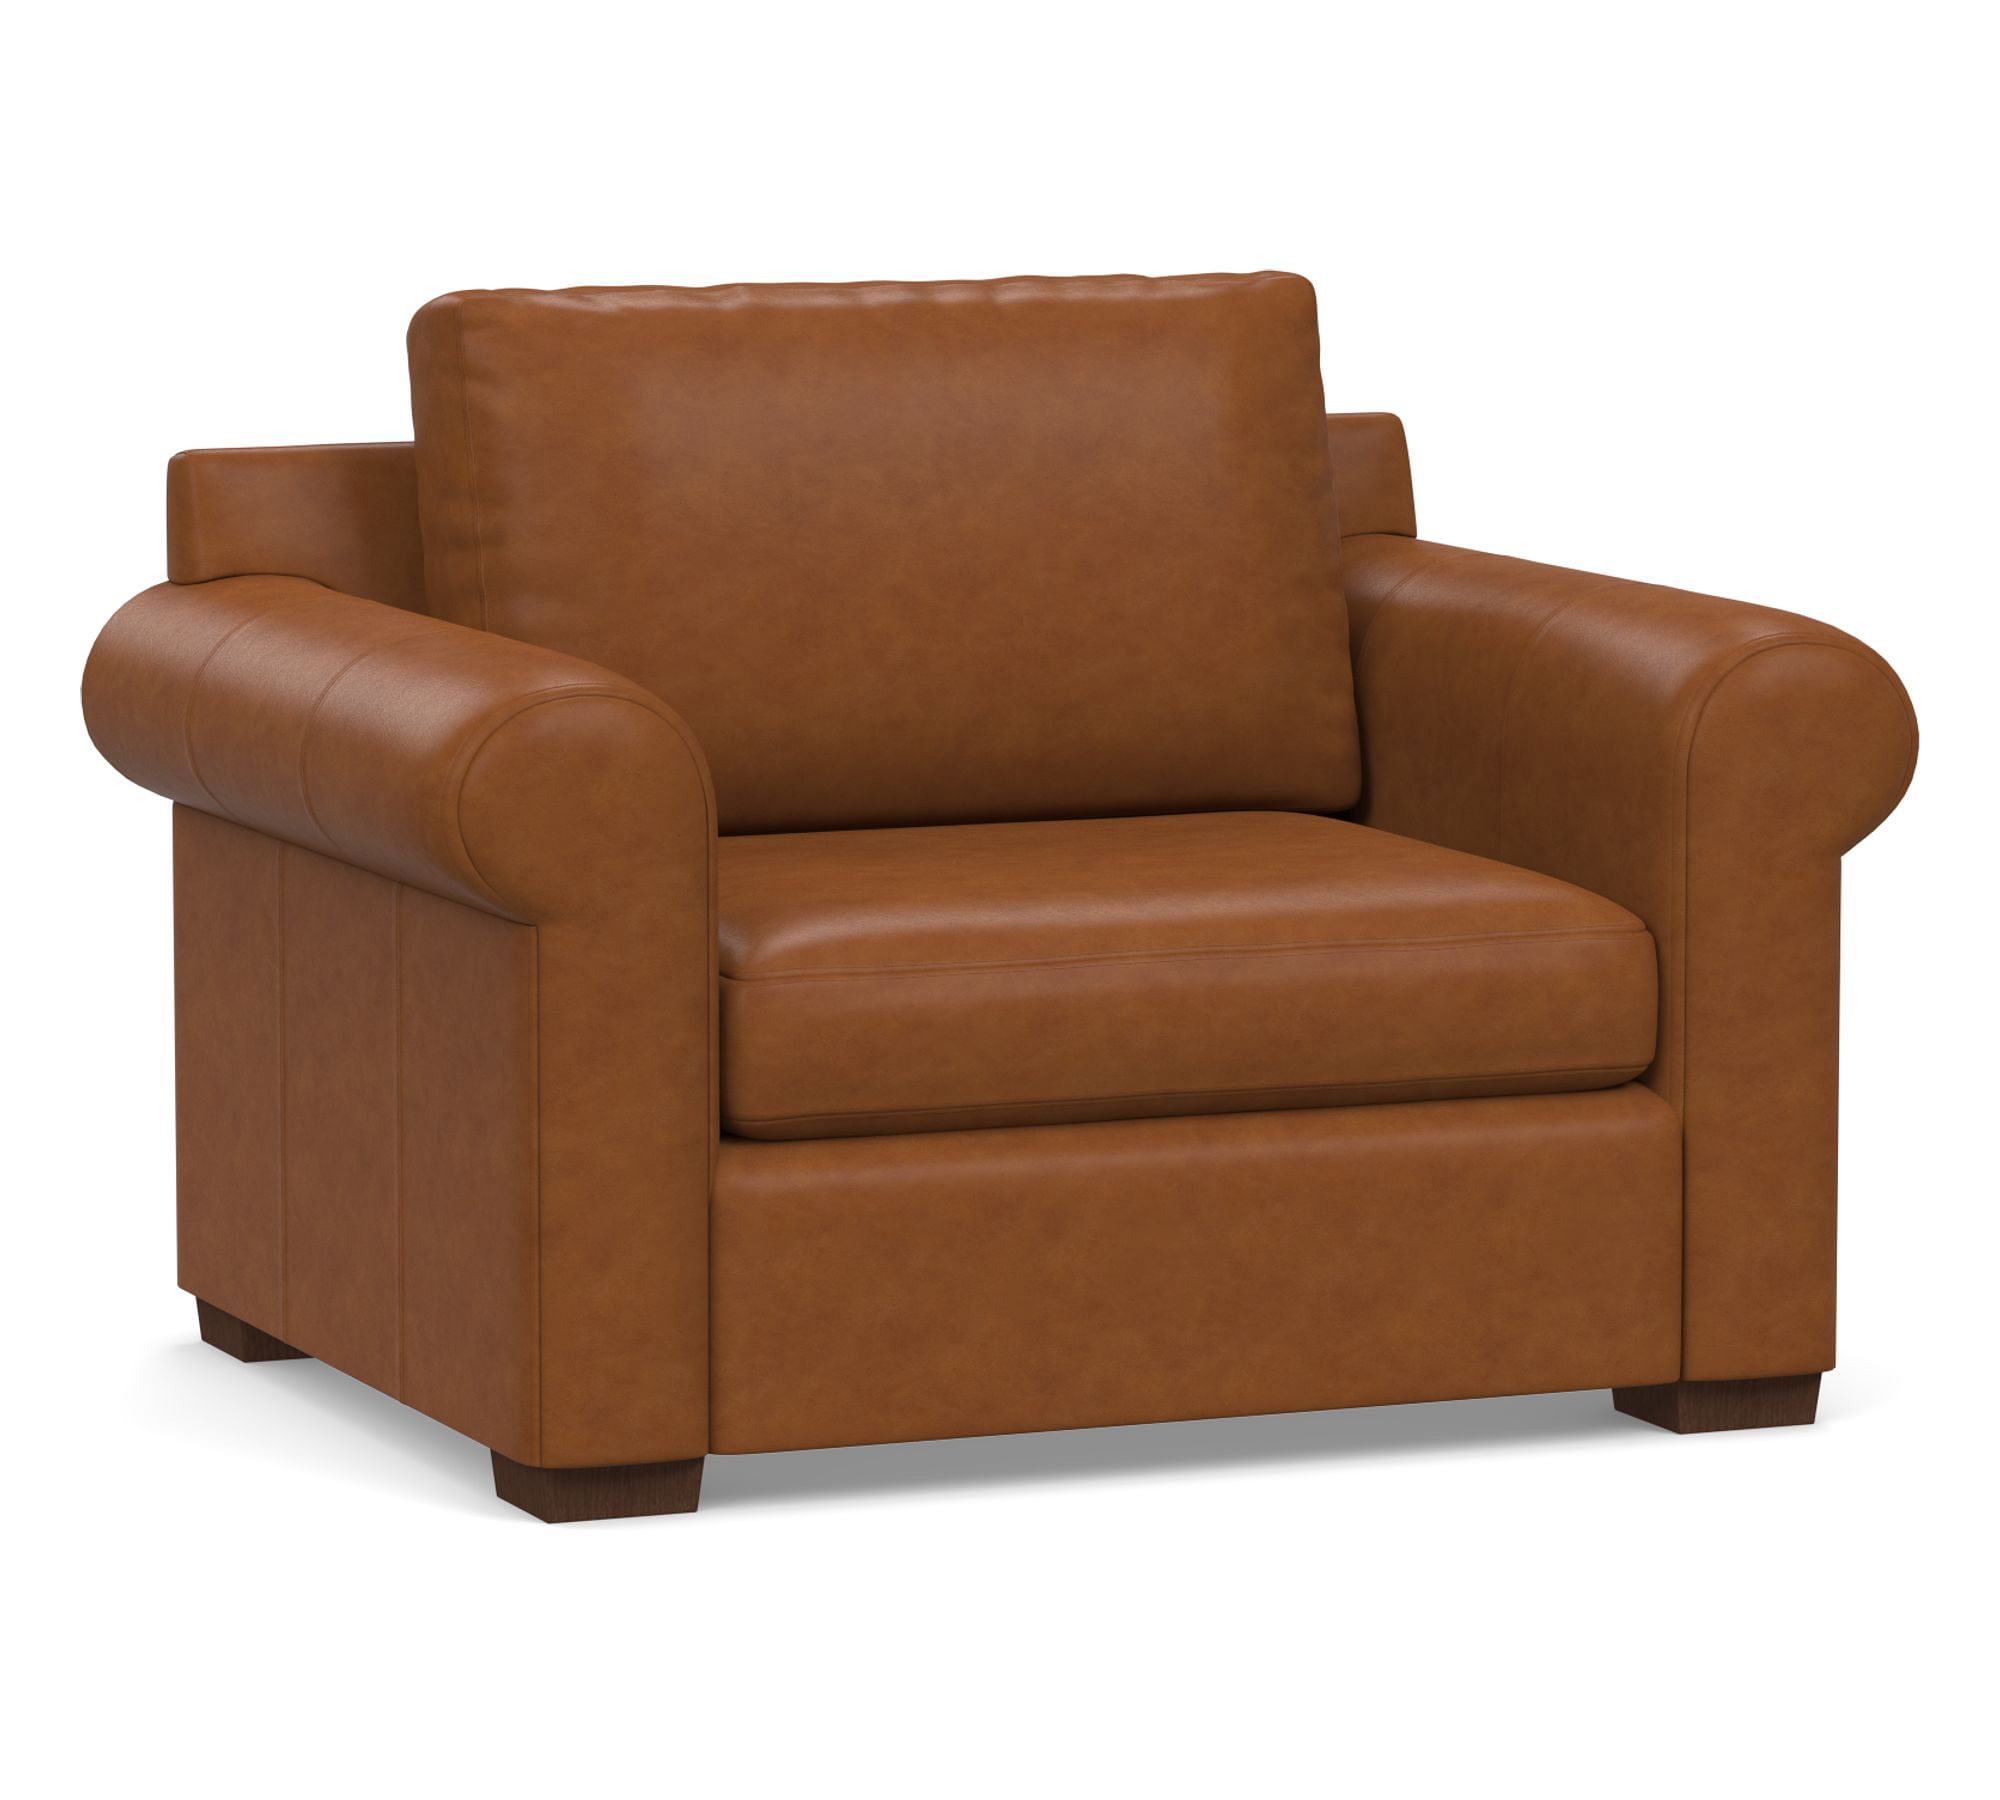 Shasta Roll Arm Leather Chair